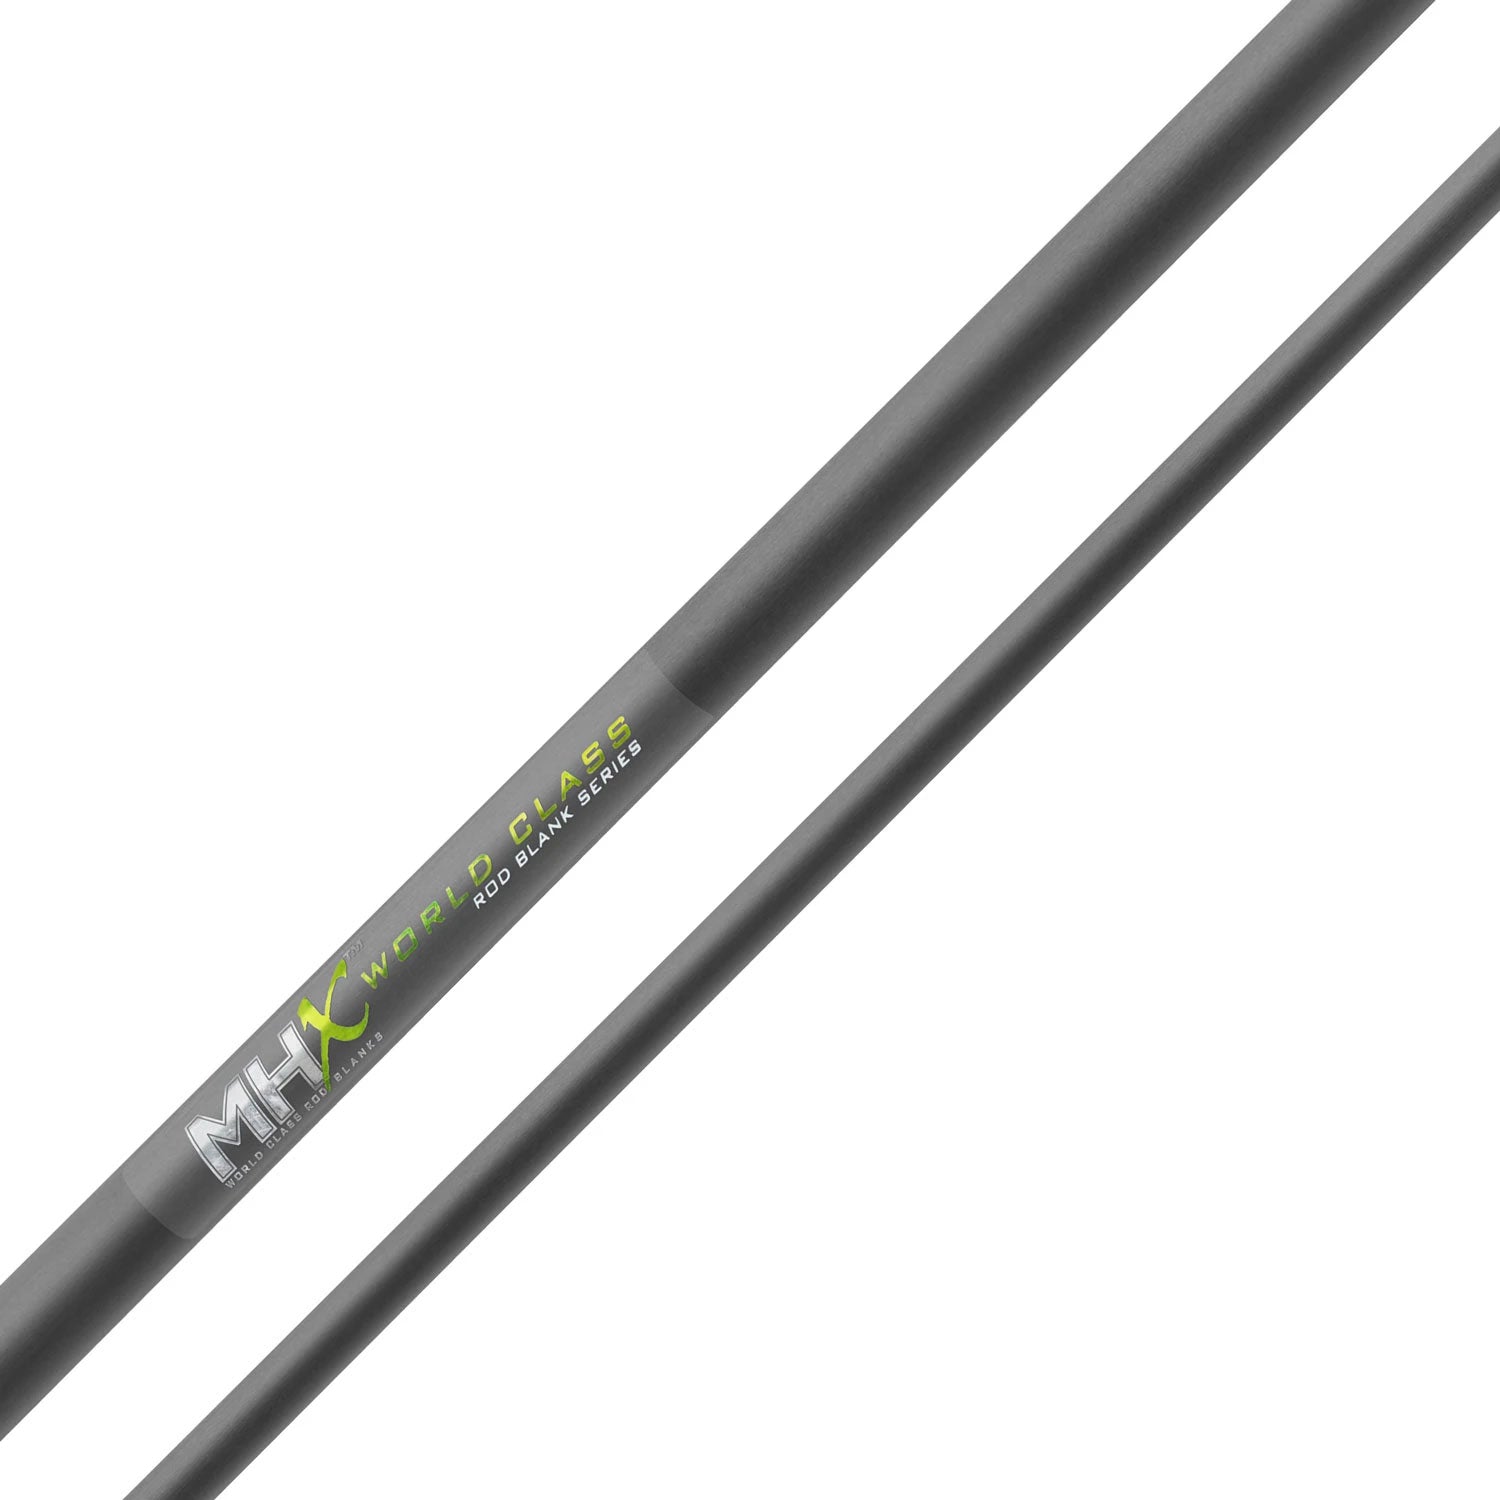 MHX 5'6 Ultralight Spinning Rod Blank - S661-2-MHX